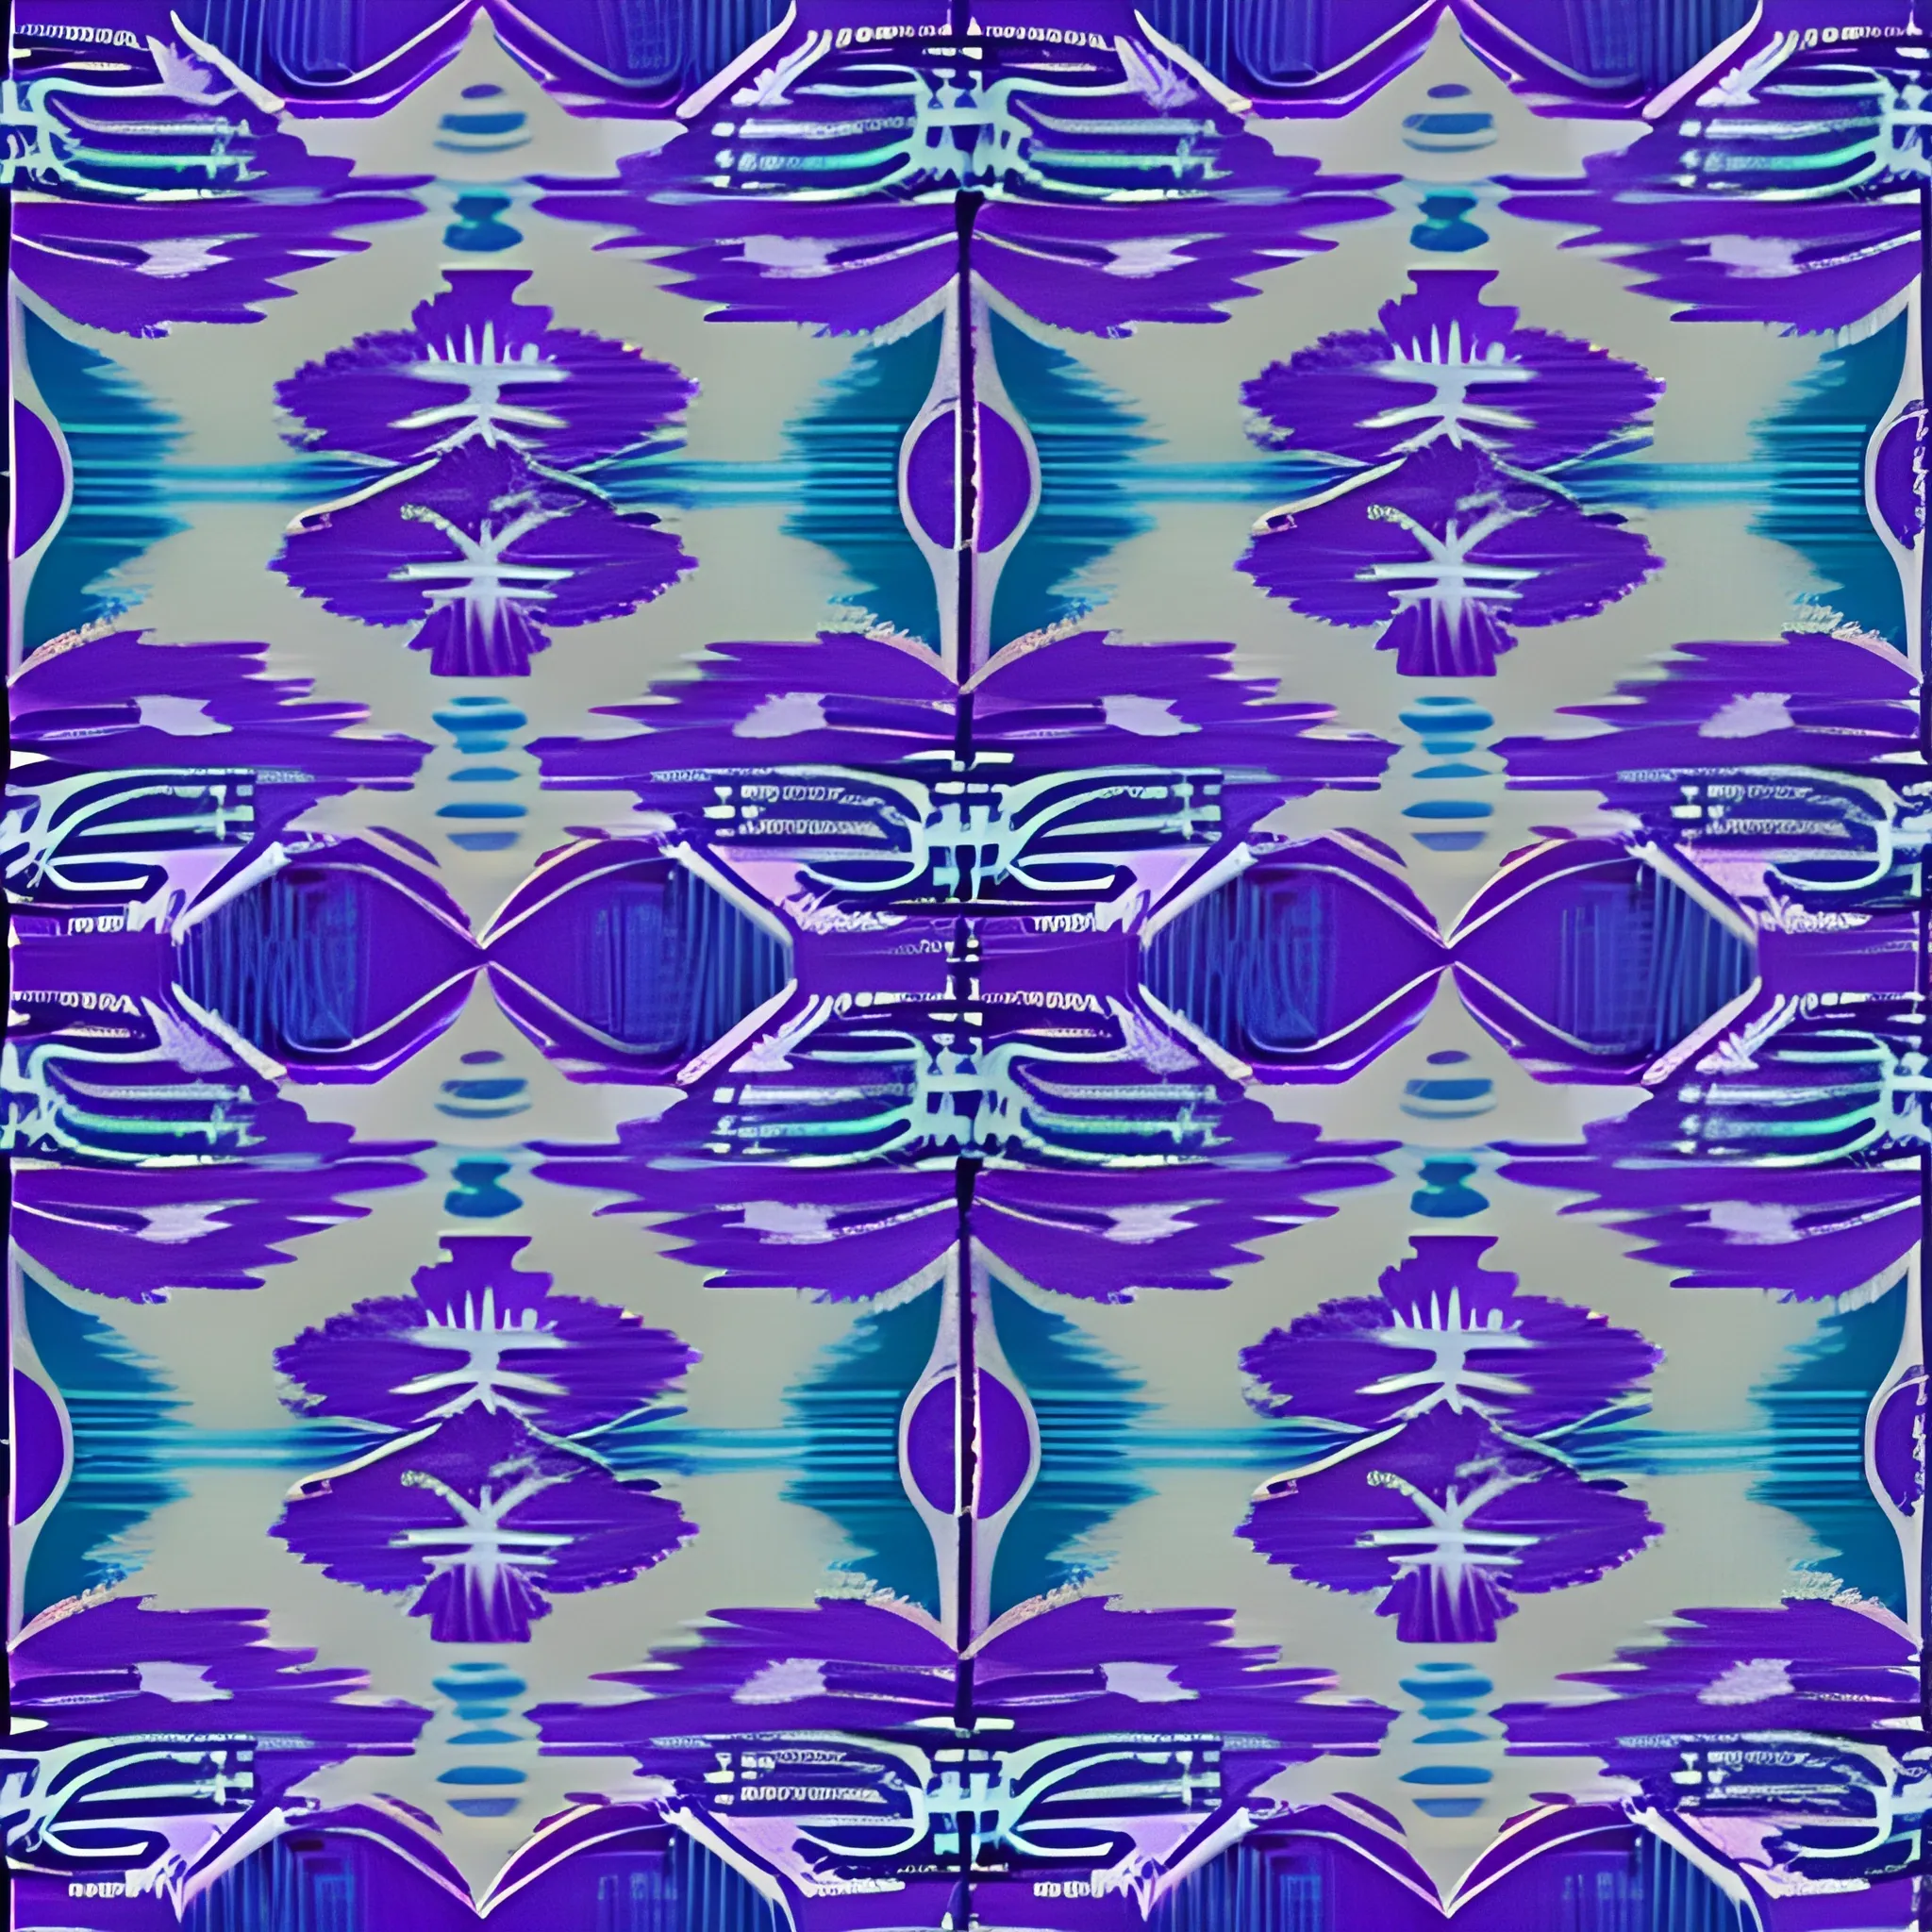 weft ikat motif designs blue purple colour, abstract designs, bigger motifs, unique abstract design.

creative, new, innovative